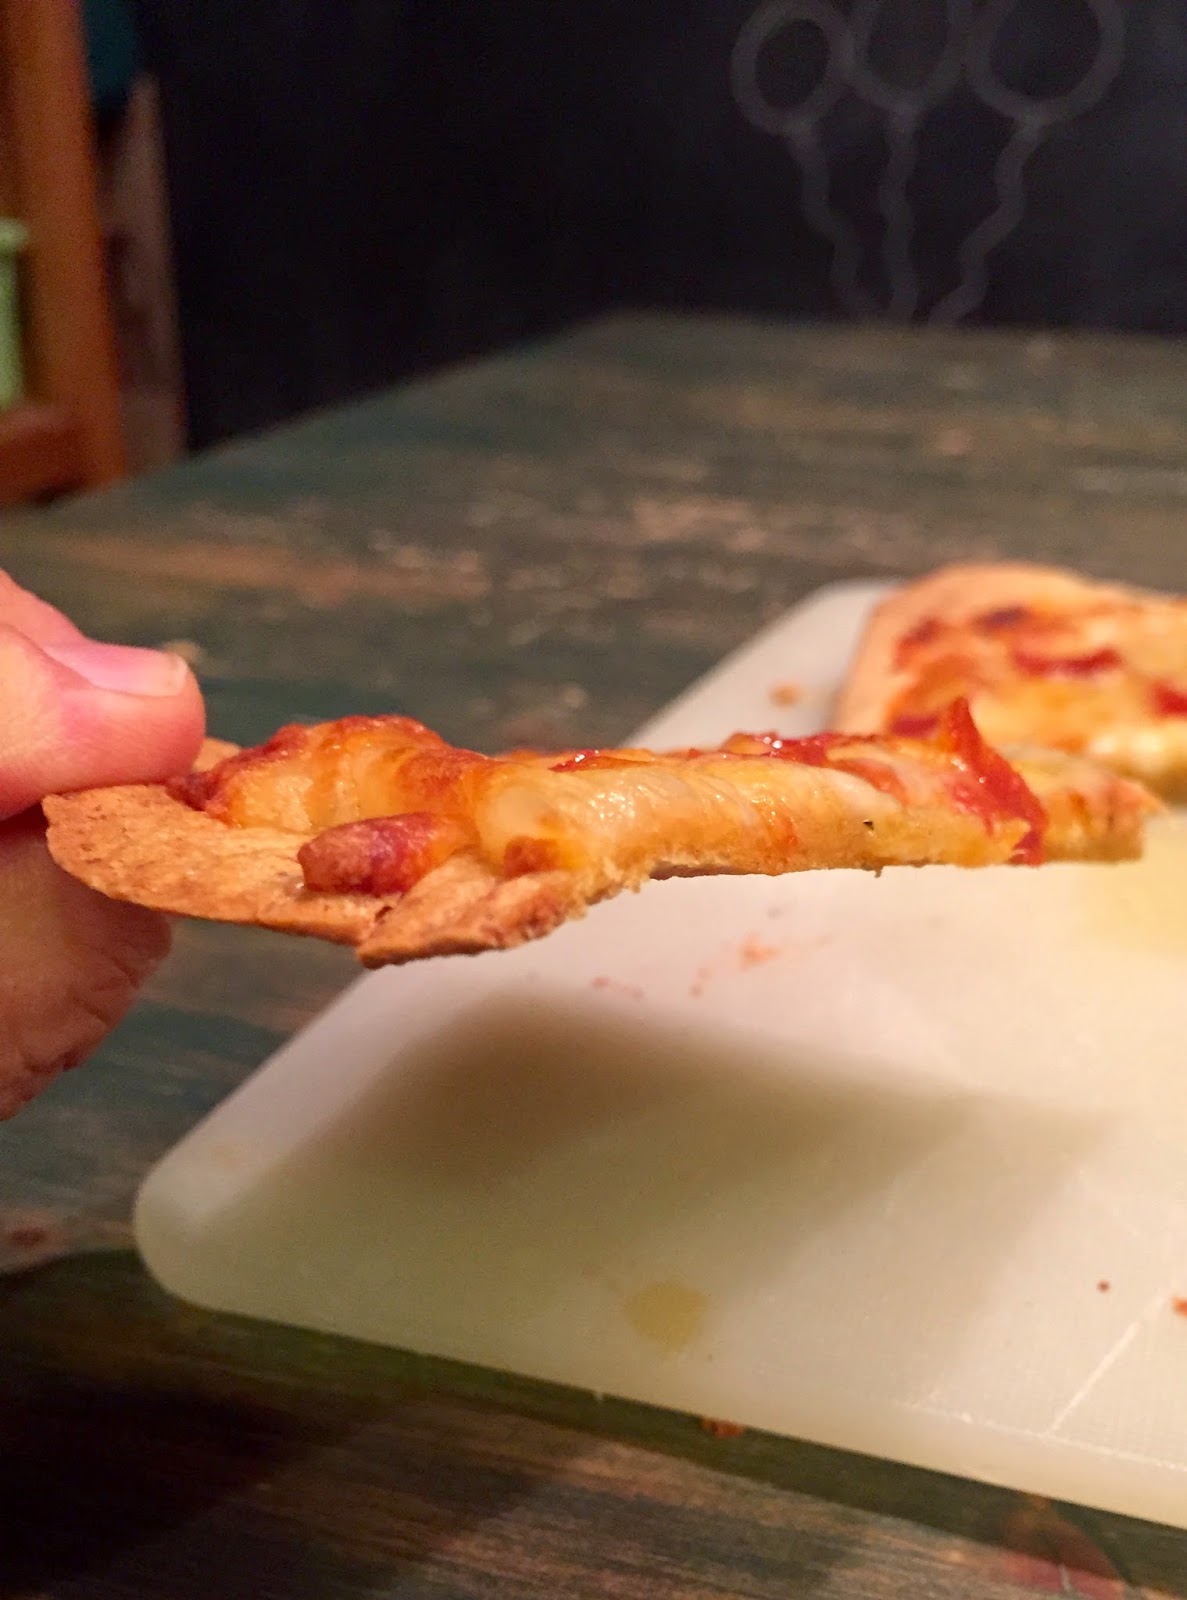 Gluten-free pizza crust